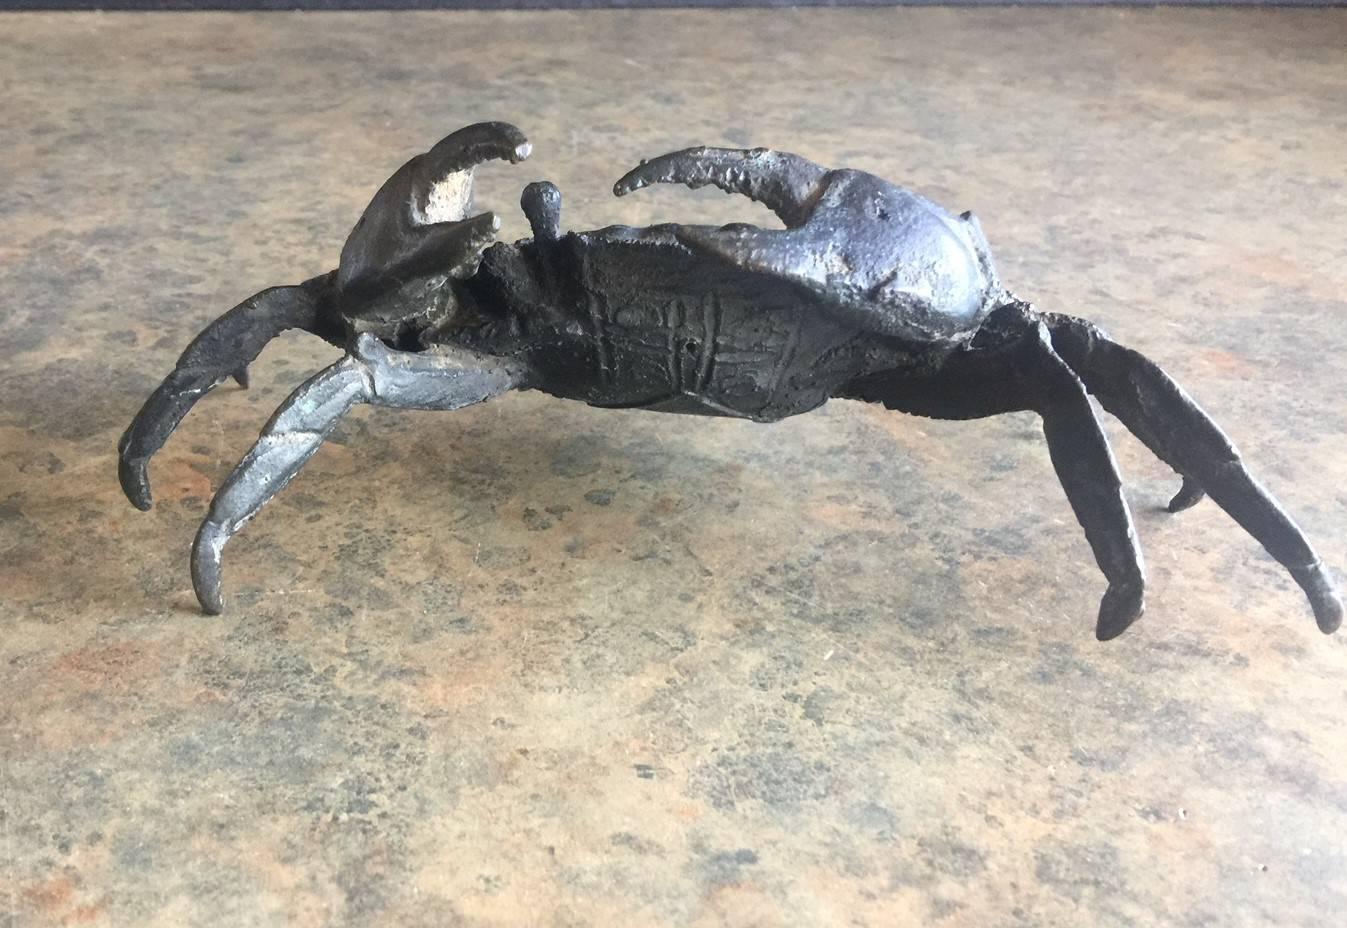 bronze crab sculpture